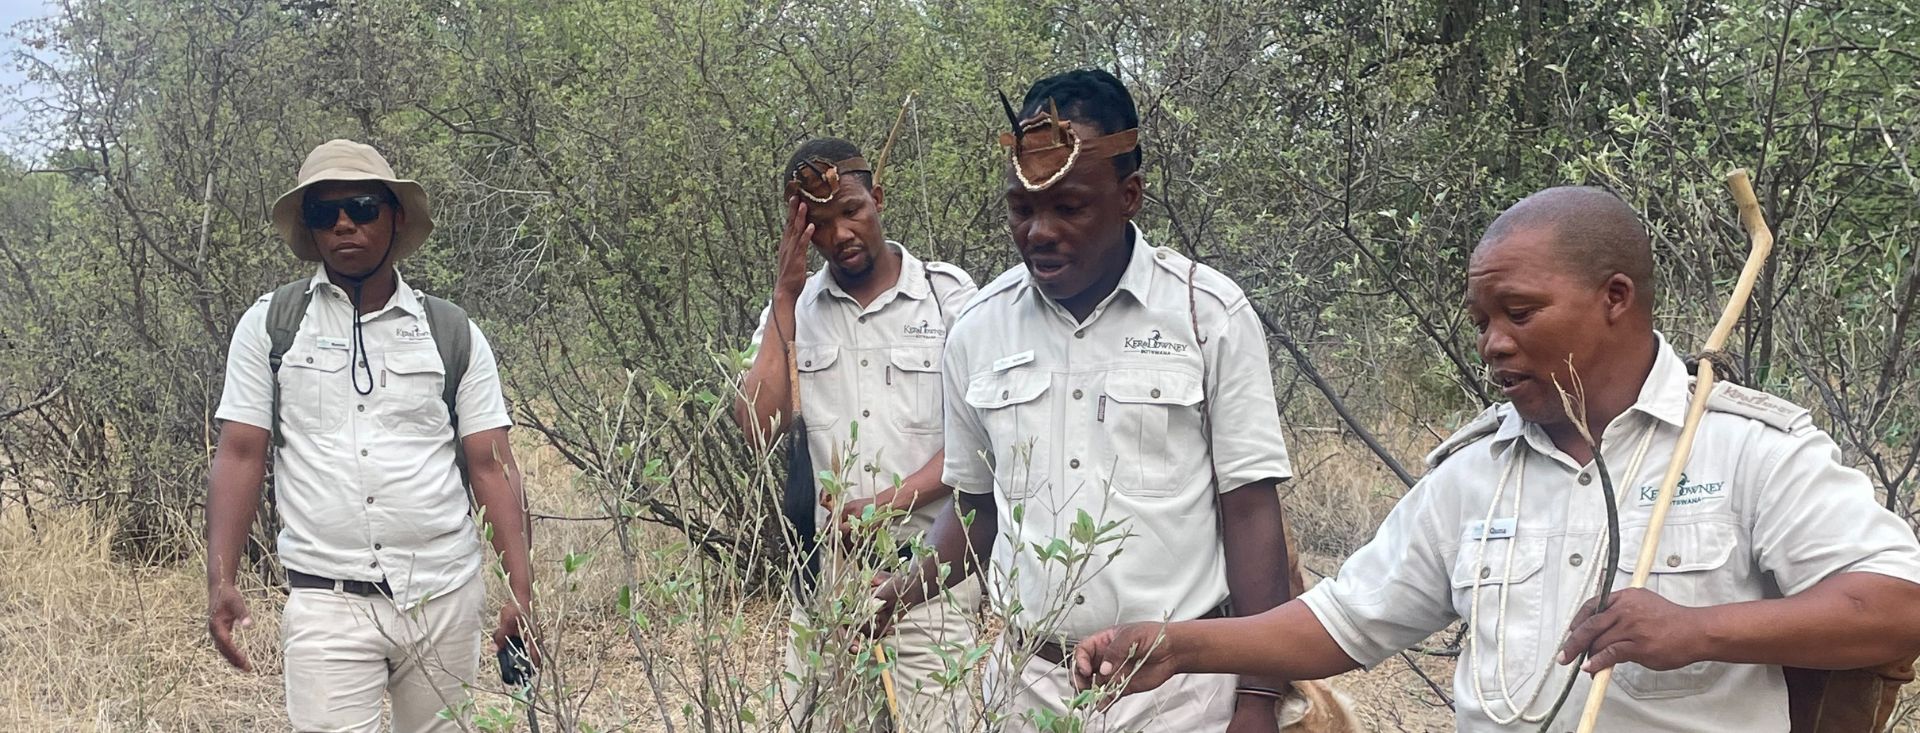 My Encounter with the Bushmen of the Kalahari